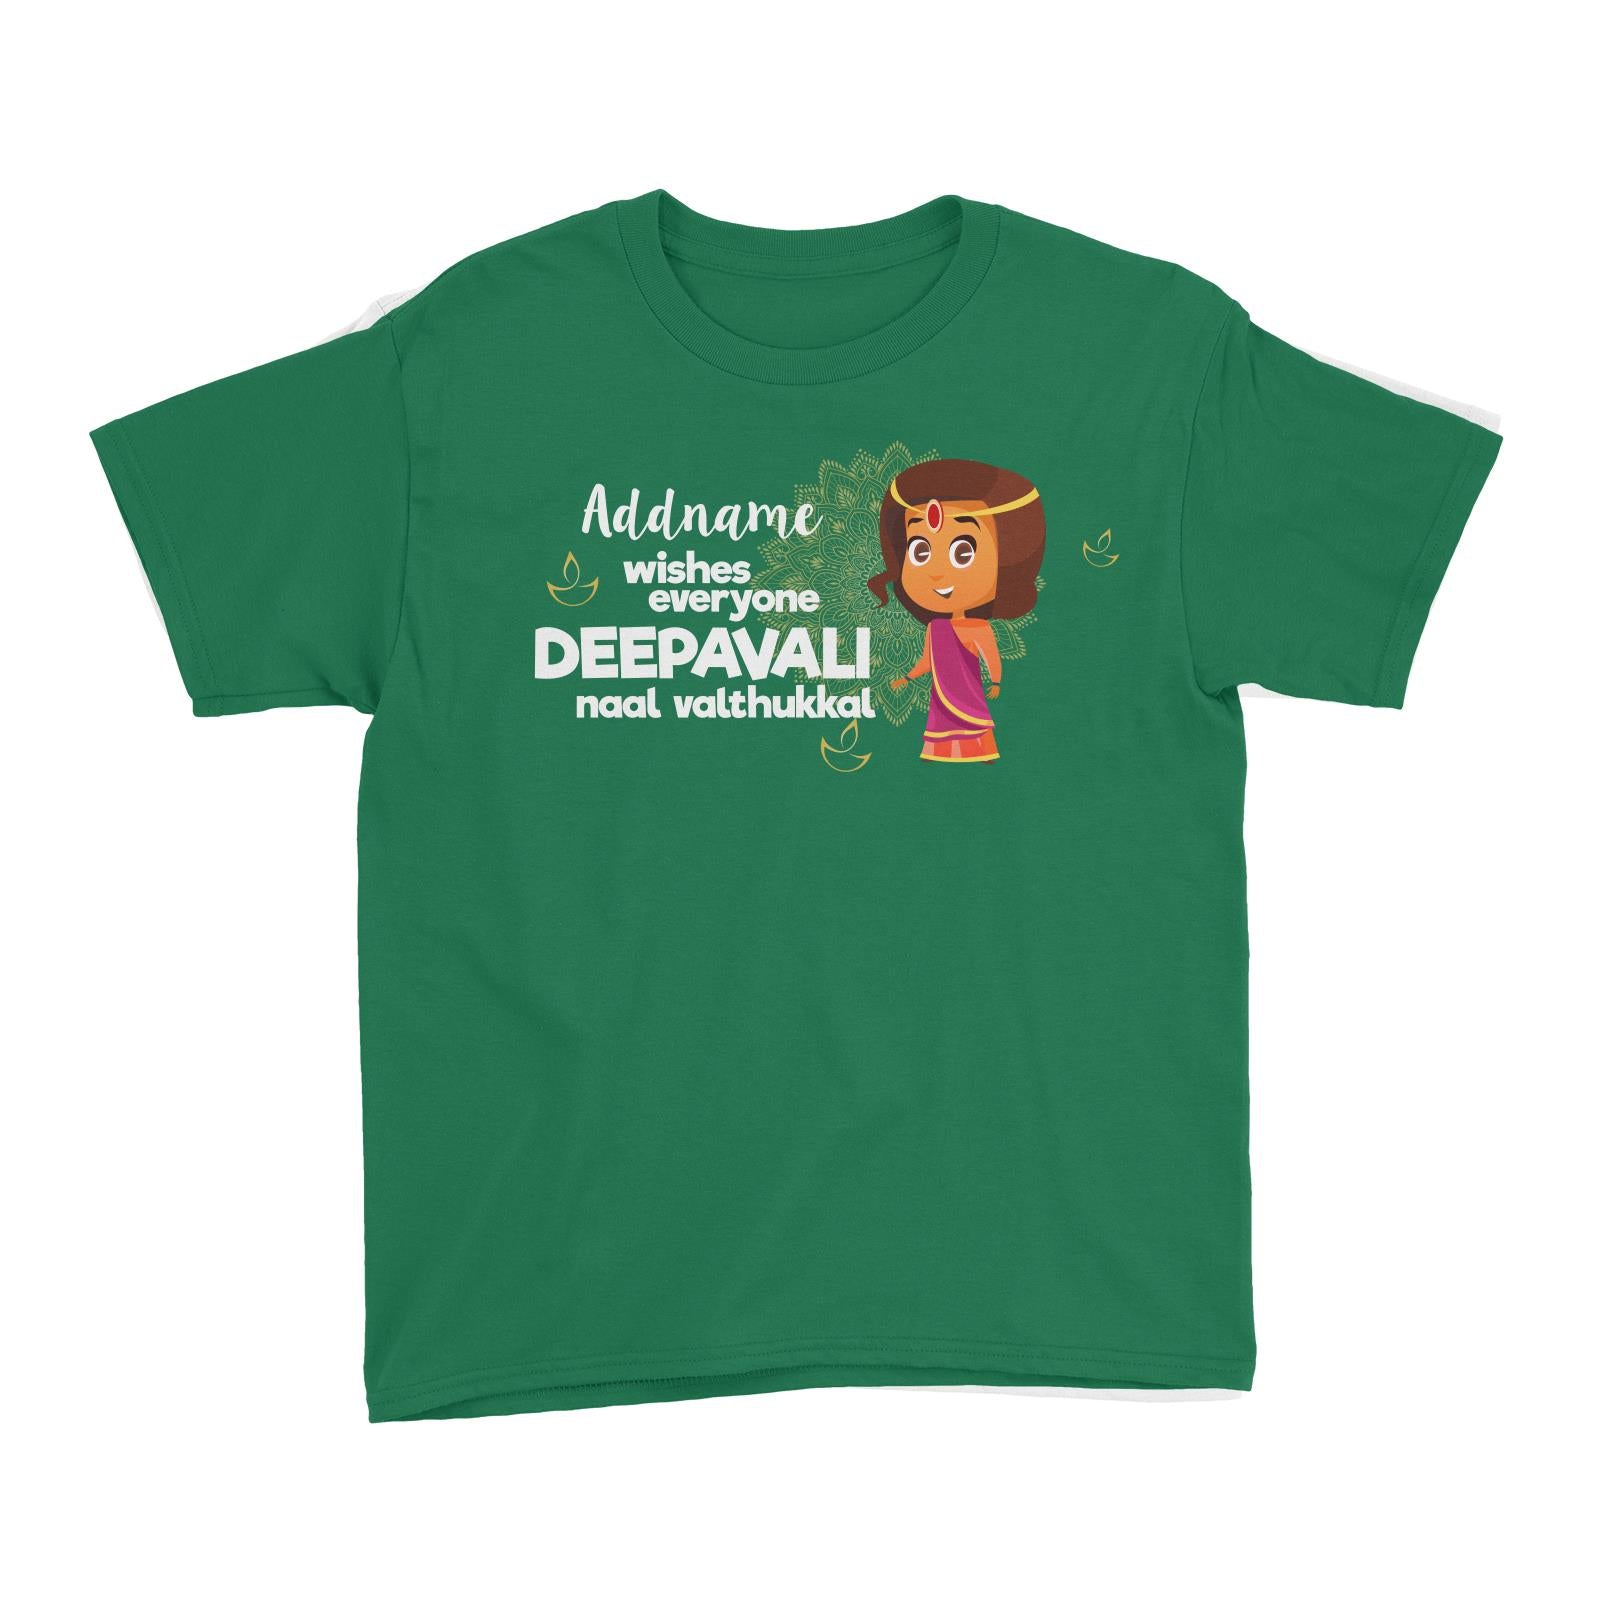 Cute Girl Wishes Everyone Deepavali Addname Kid's T-Shirt